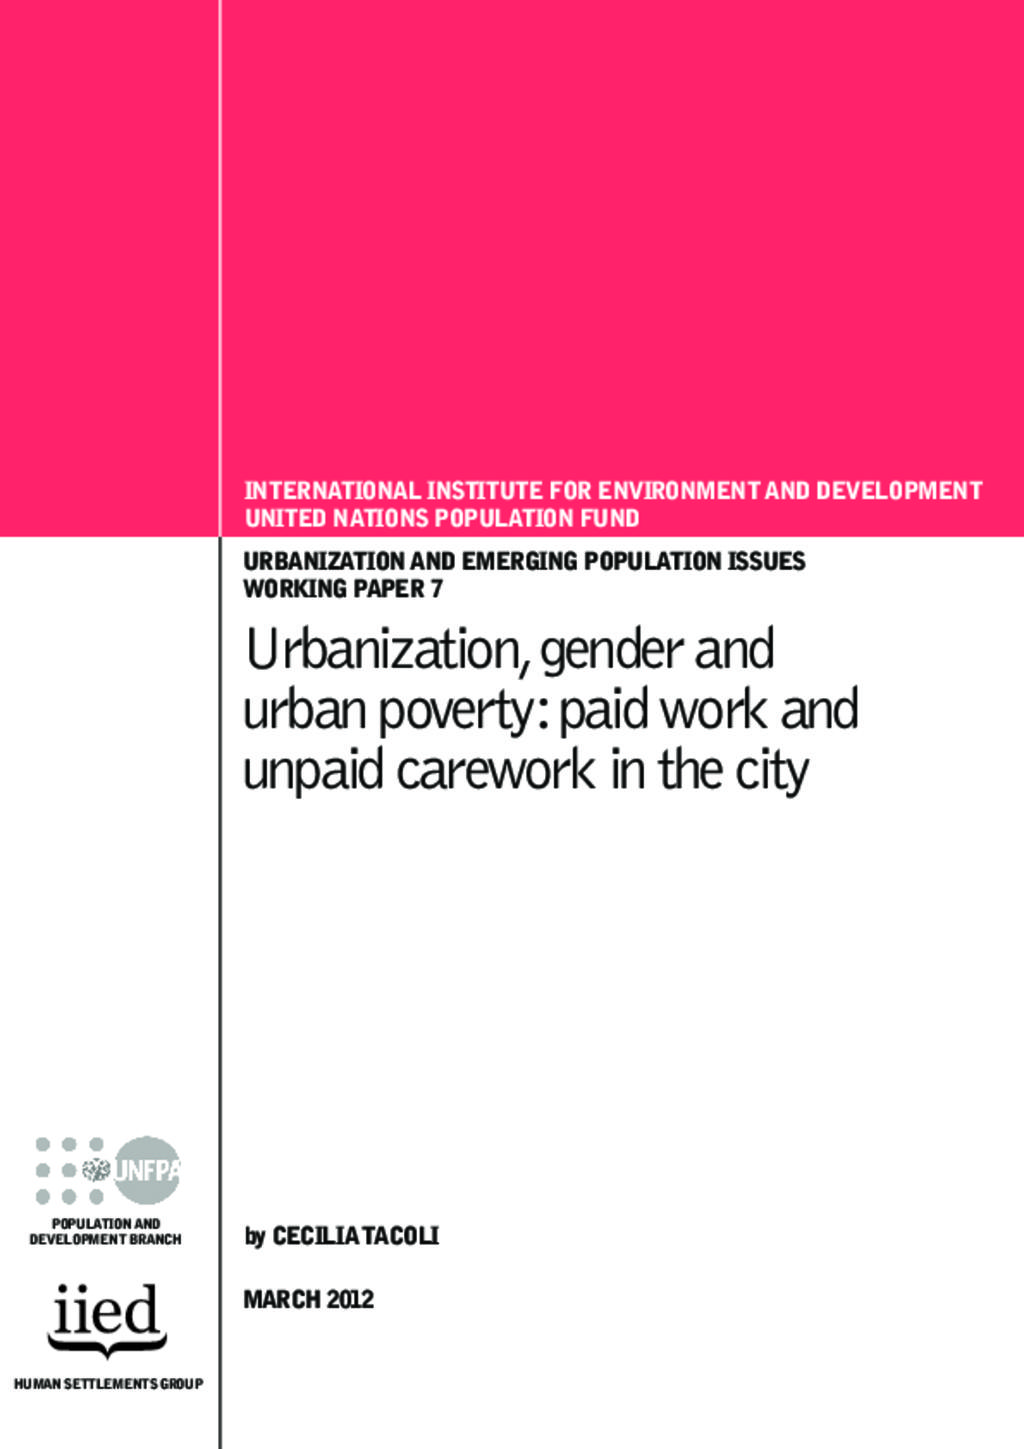 Urbanisation, poverty